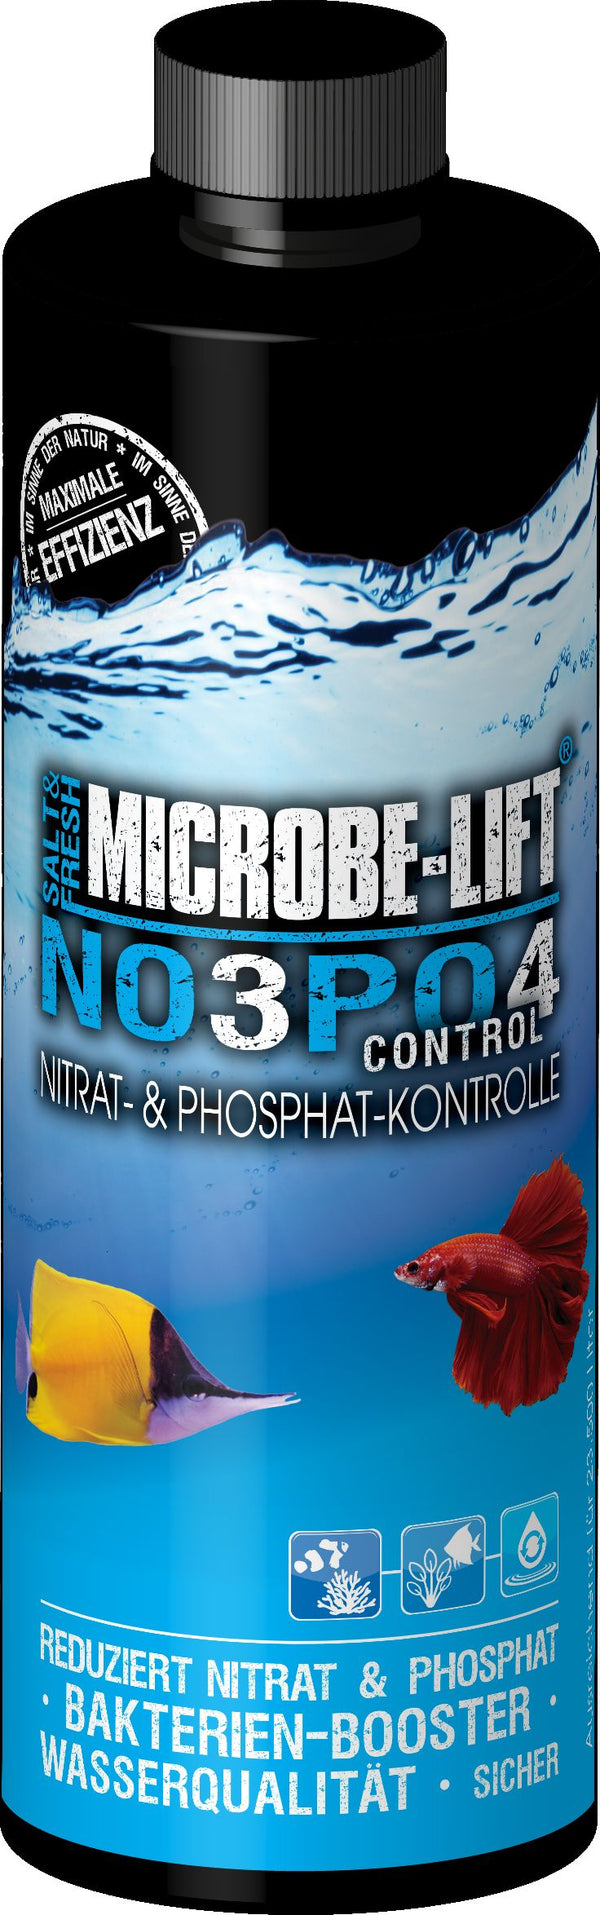 NOPO Control - Nitrat- & Phosphat-Kontrolle (473ml.)